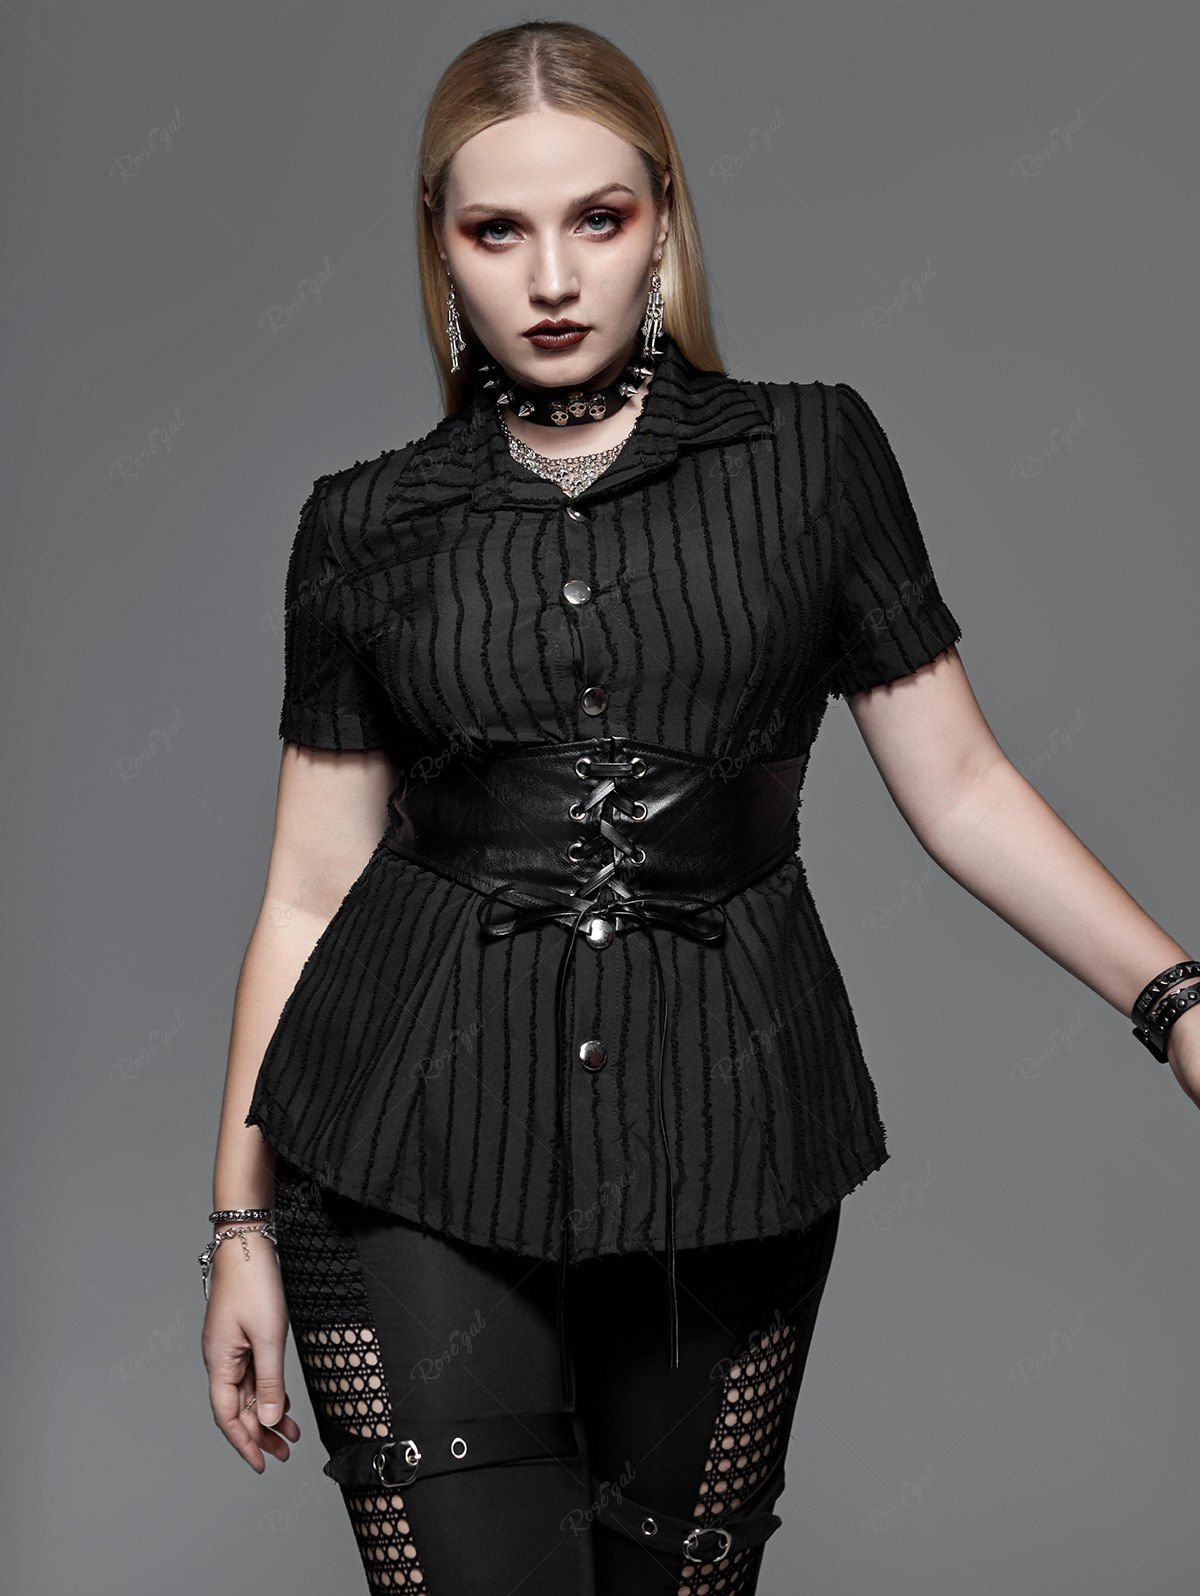 Chic Gothic Jacquard PU Leather Lace-up Corset Shirt  